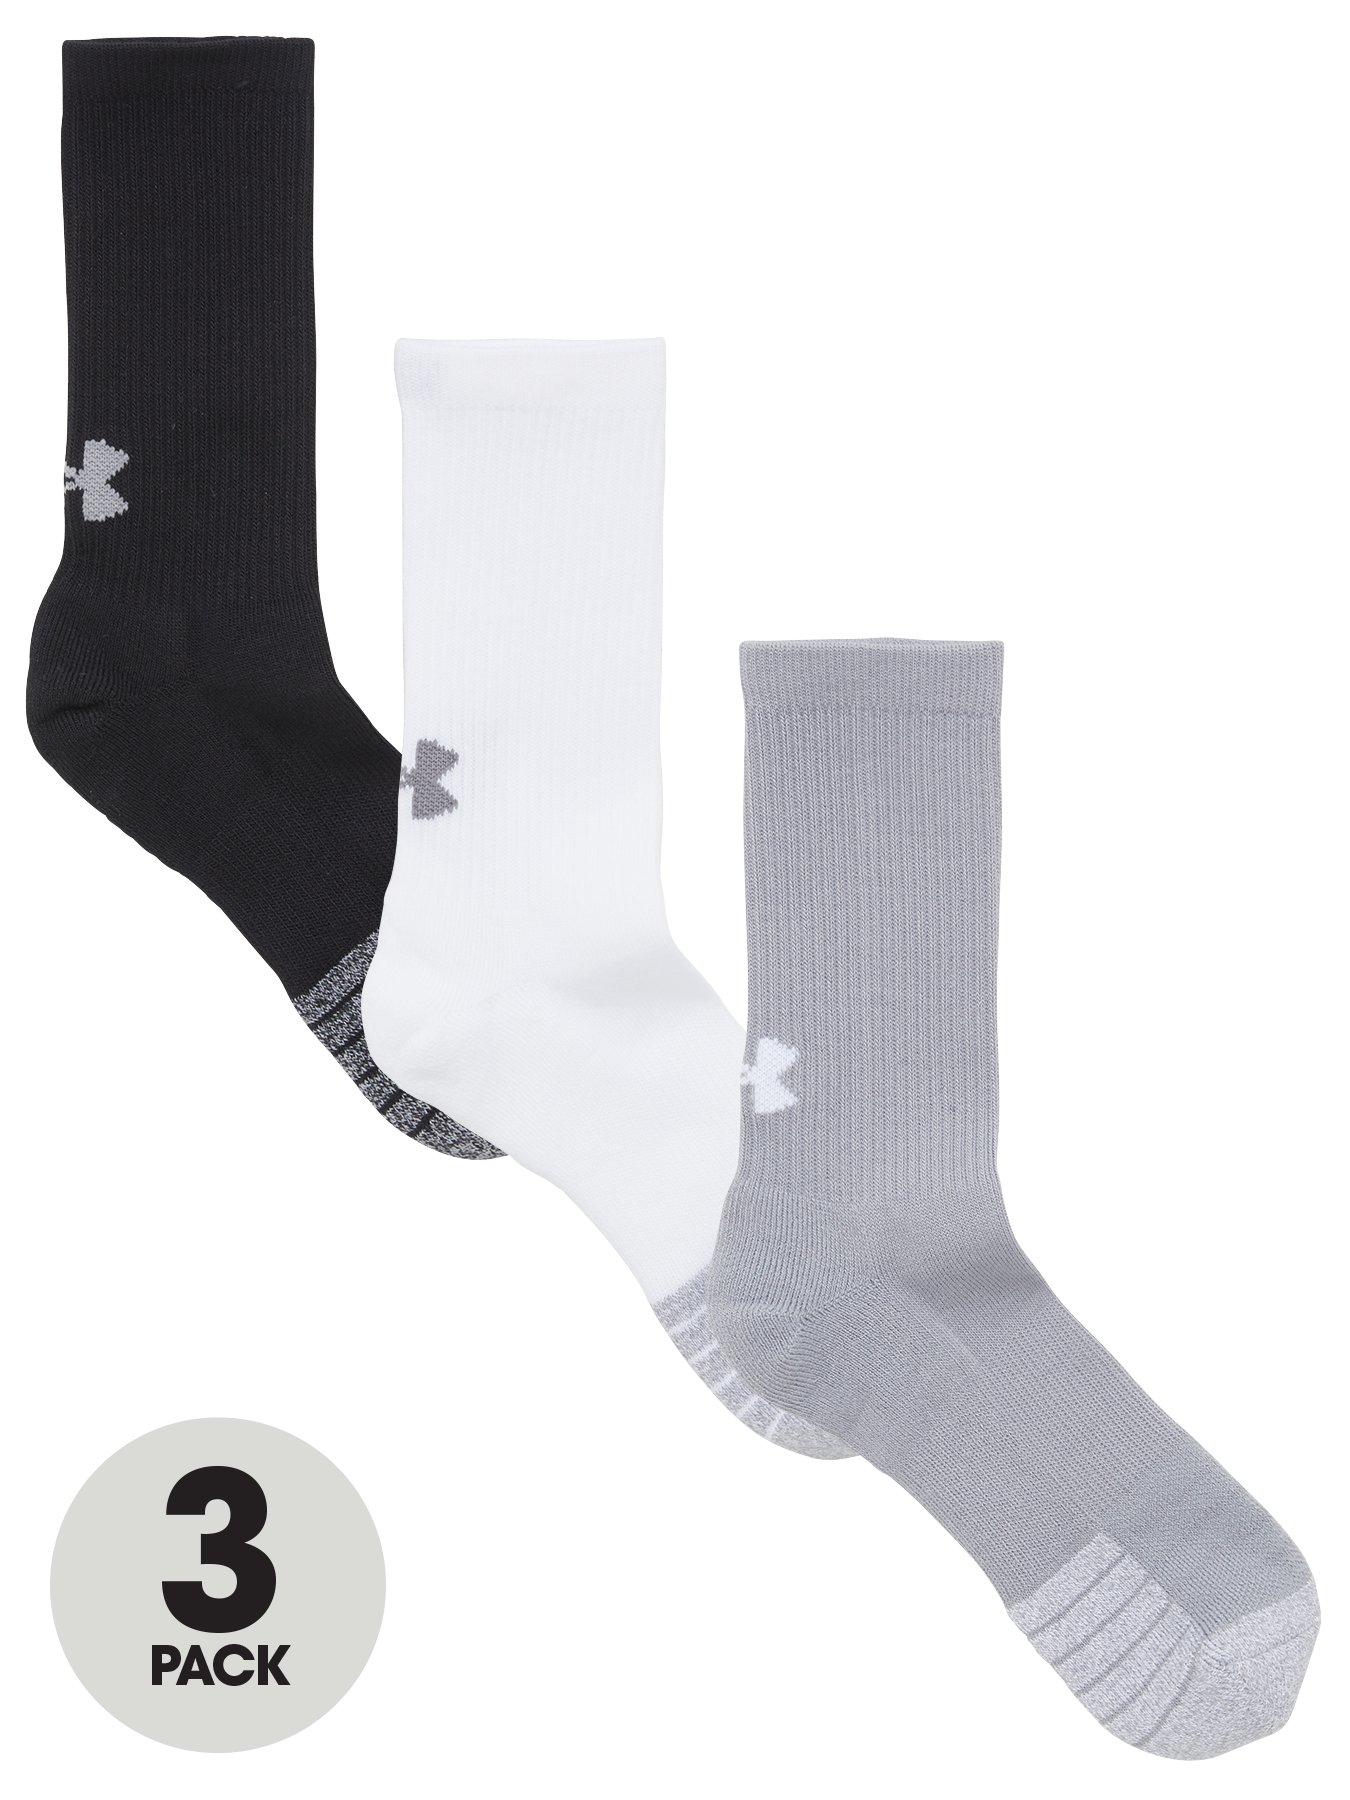 UNDER ARMOUR Heatgear Crew Socks - Black/White/Grey | very.co.uk